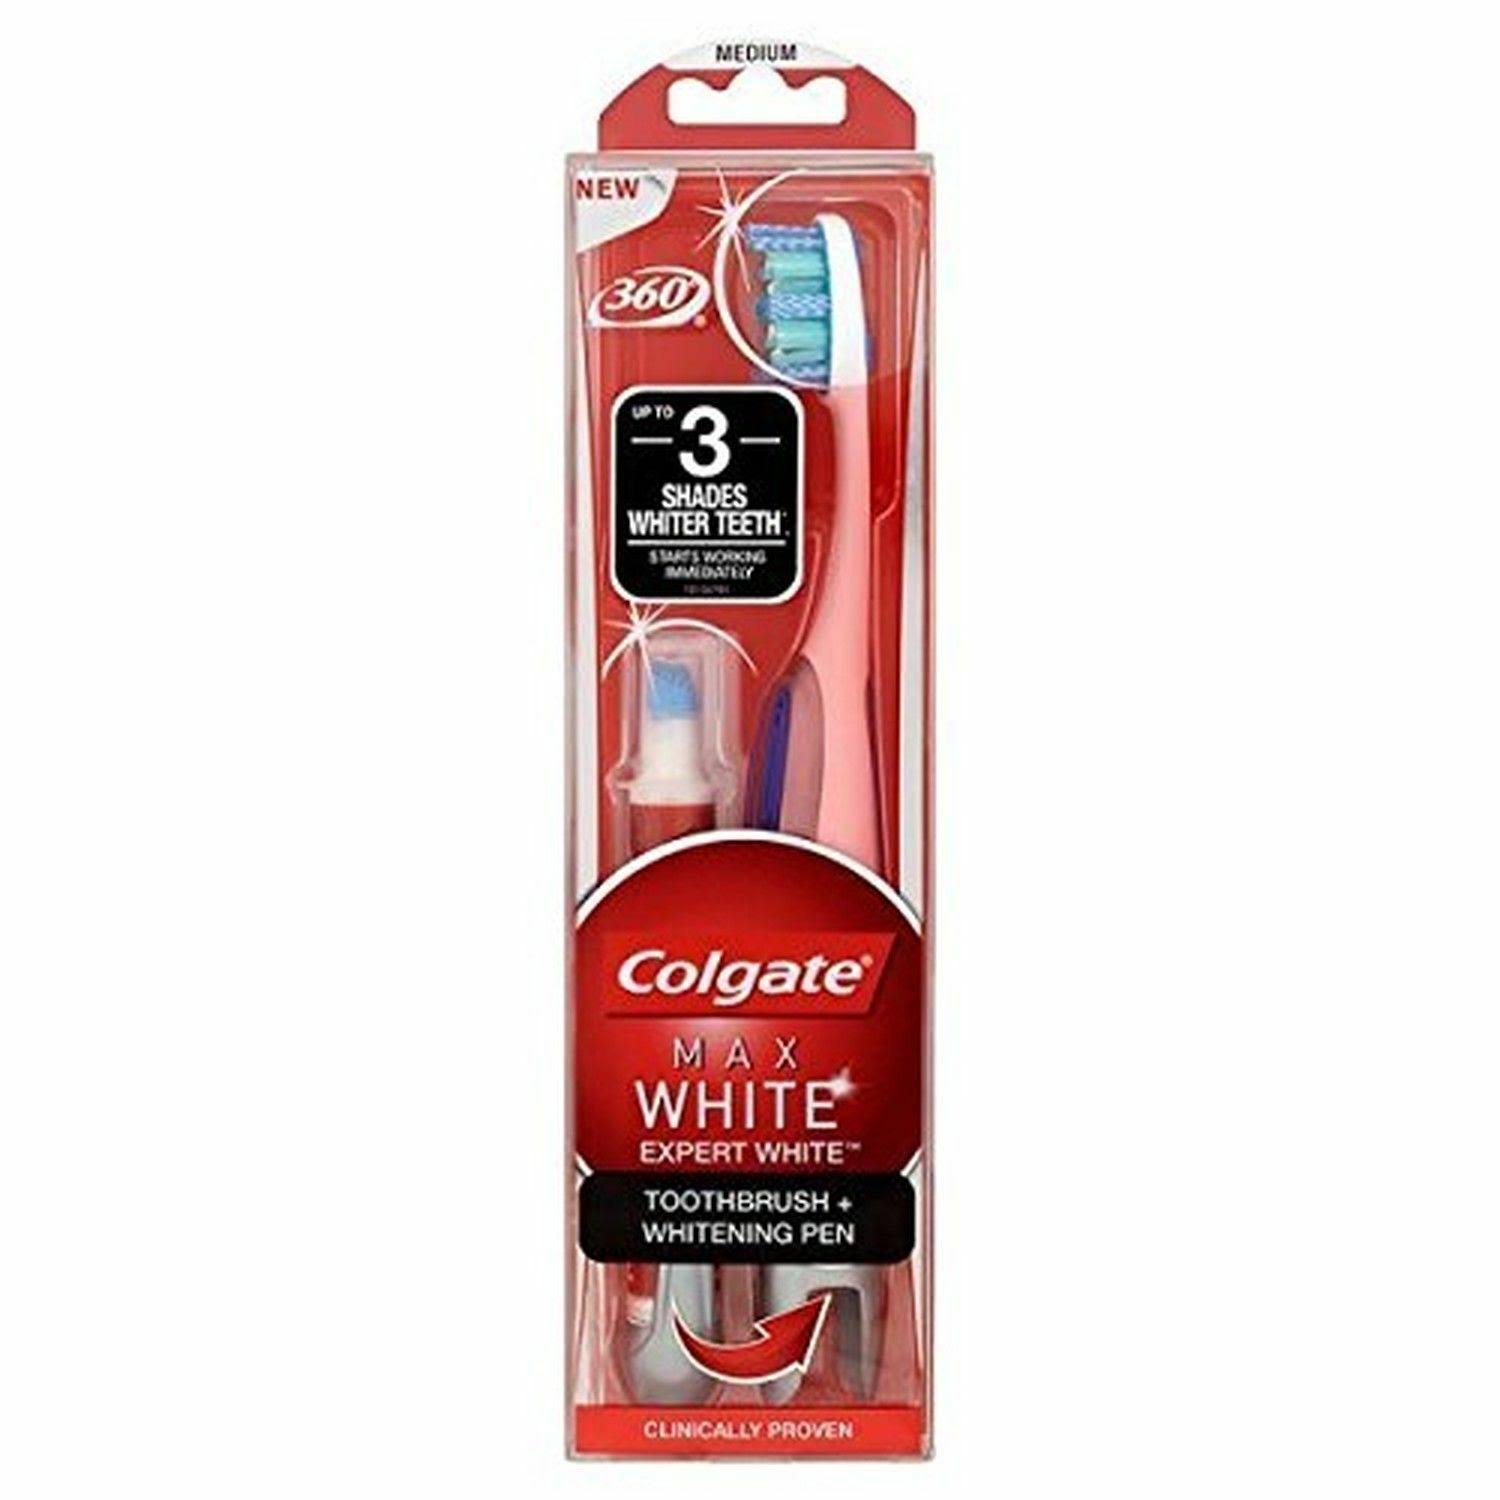 Colgate Max White Expert White Toothbrush + Whitening Pen - Medium